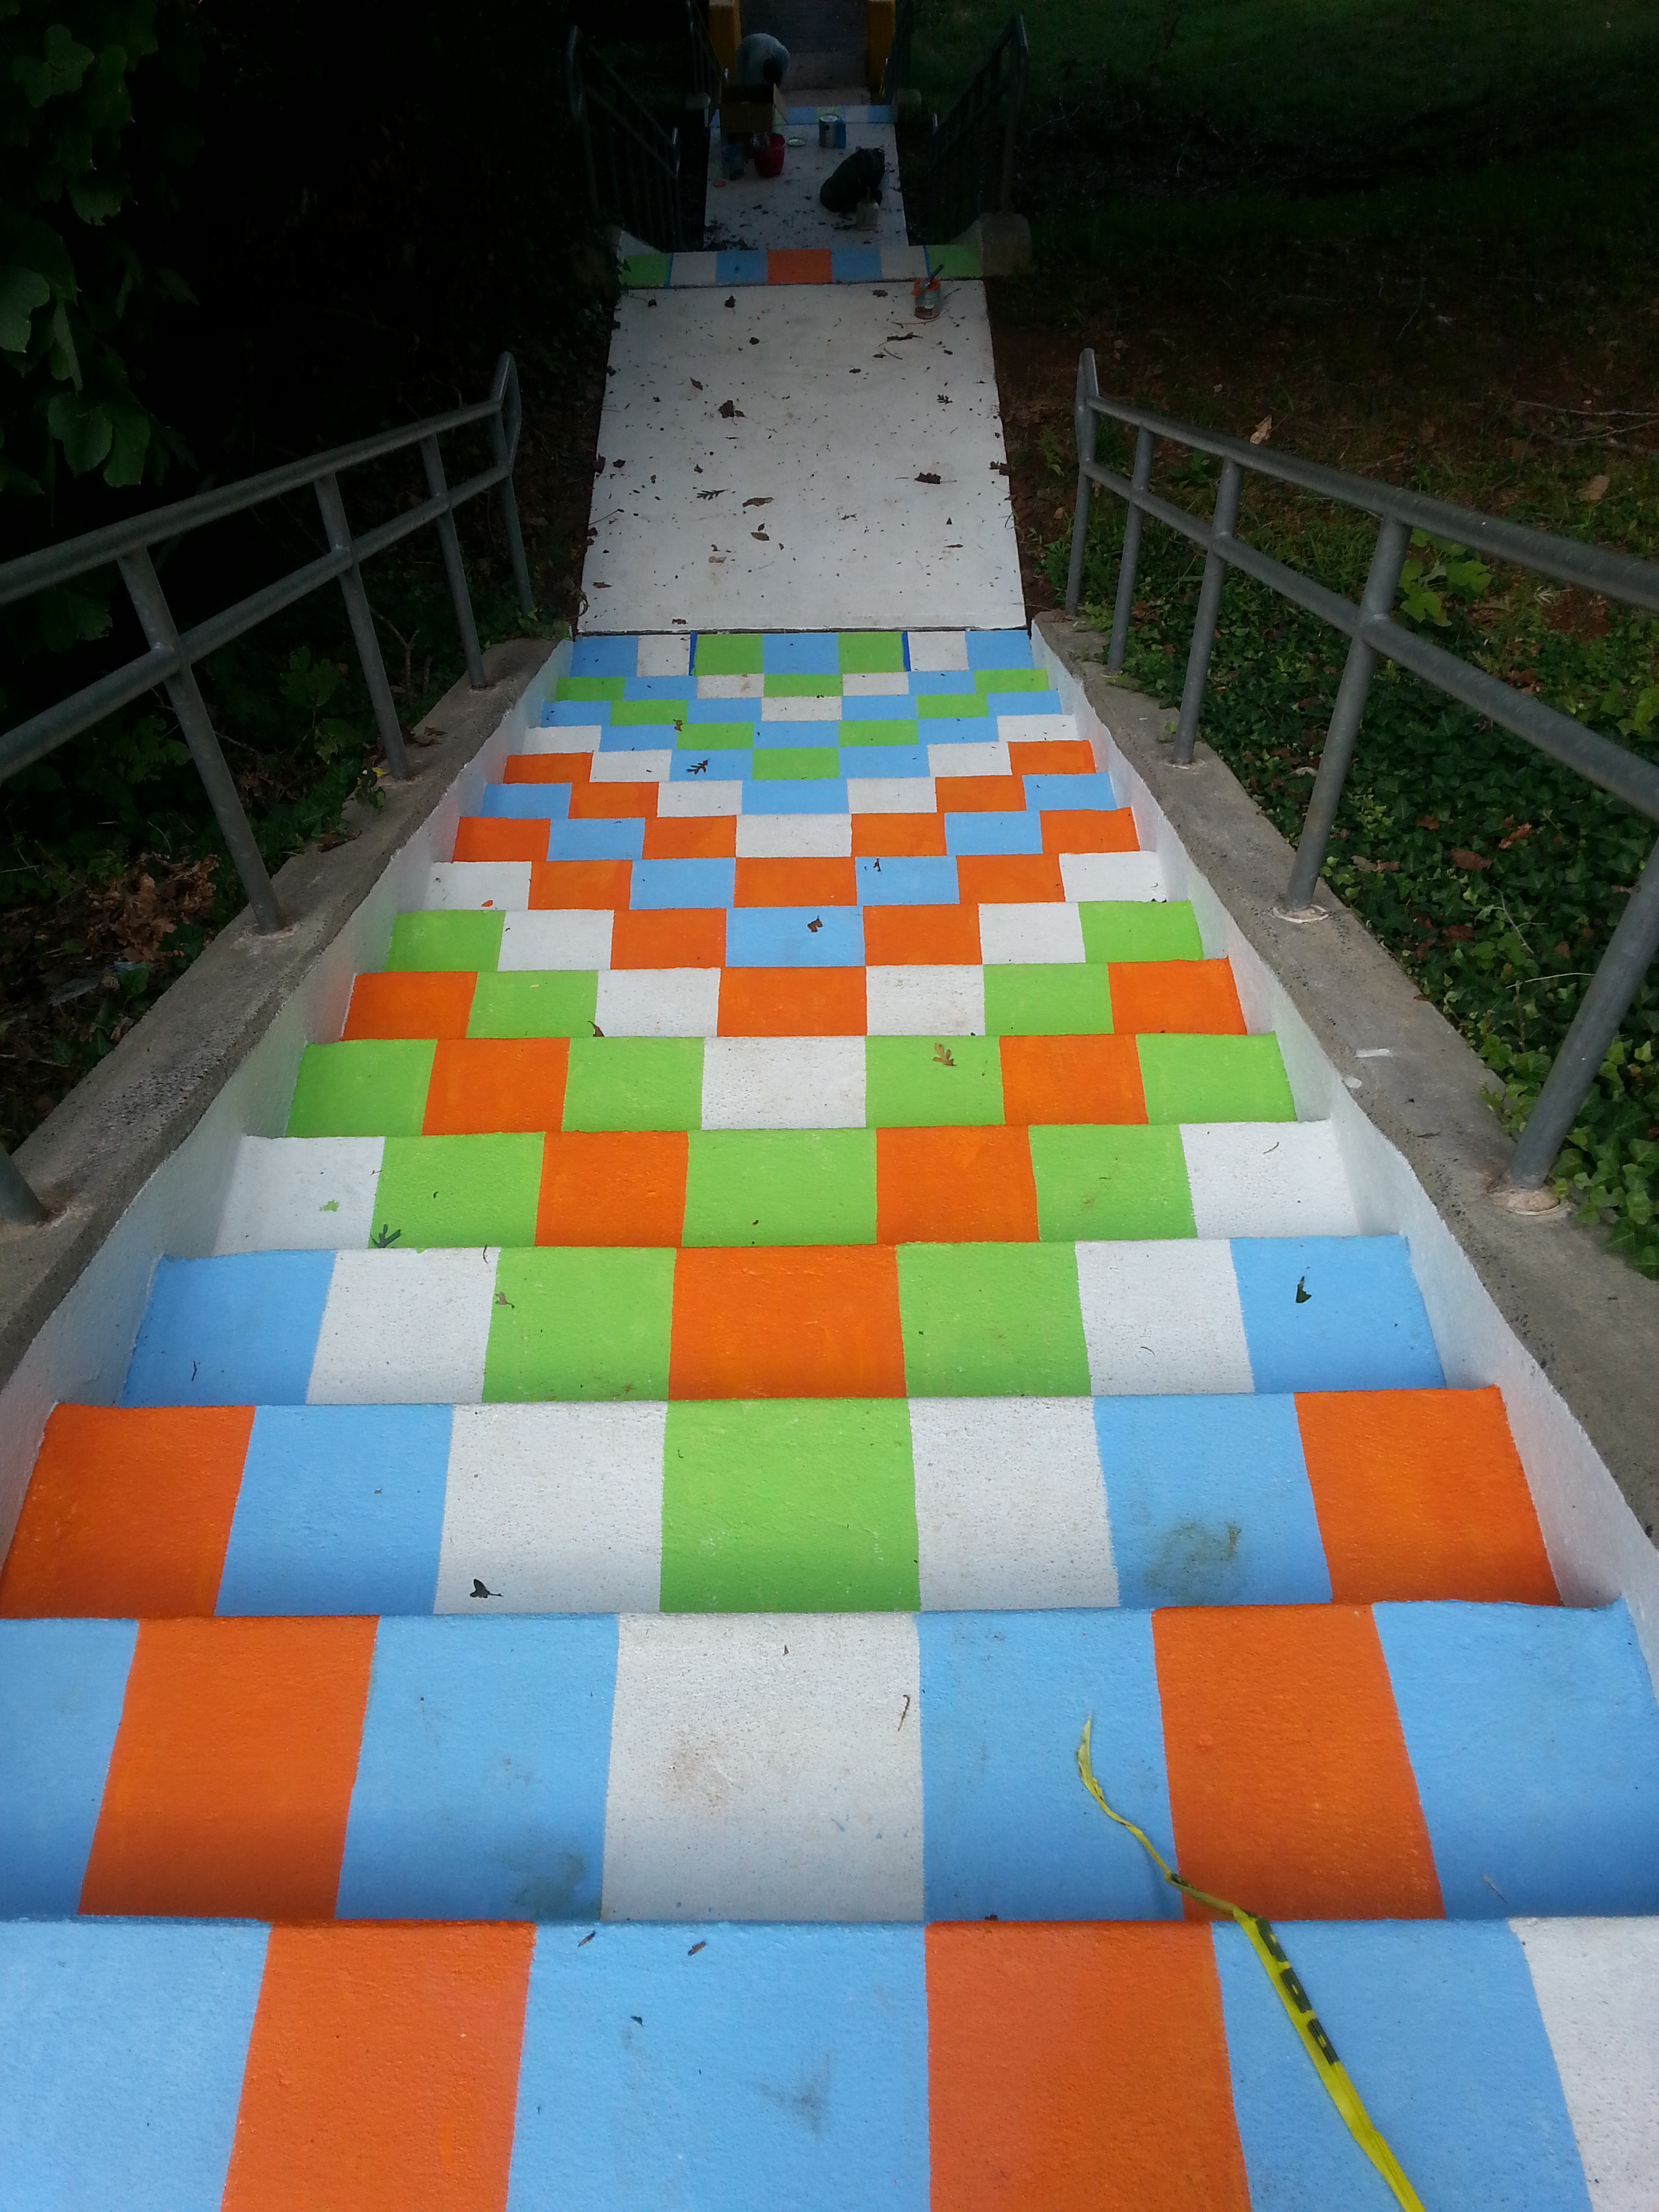 Stairs-Anita-Stroud-park-mural-no-barrers-project-2016-julio-gonzalez-art-stair-mura.jpg